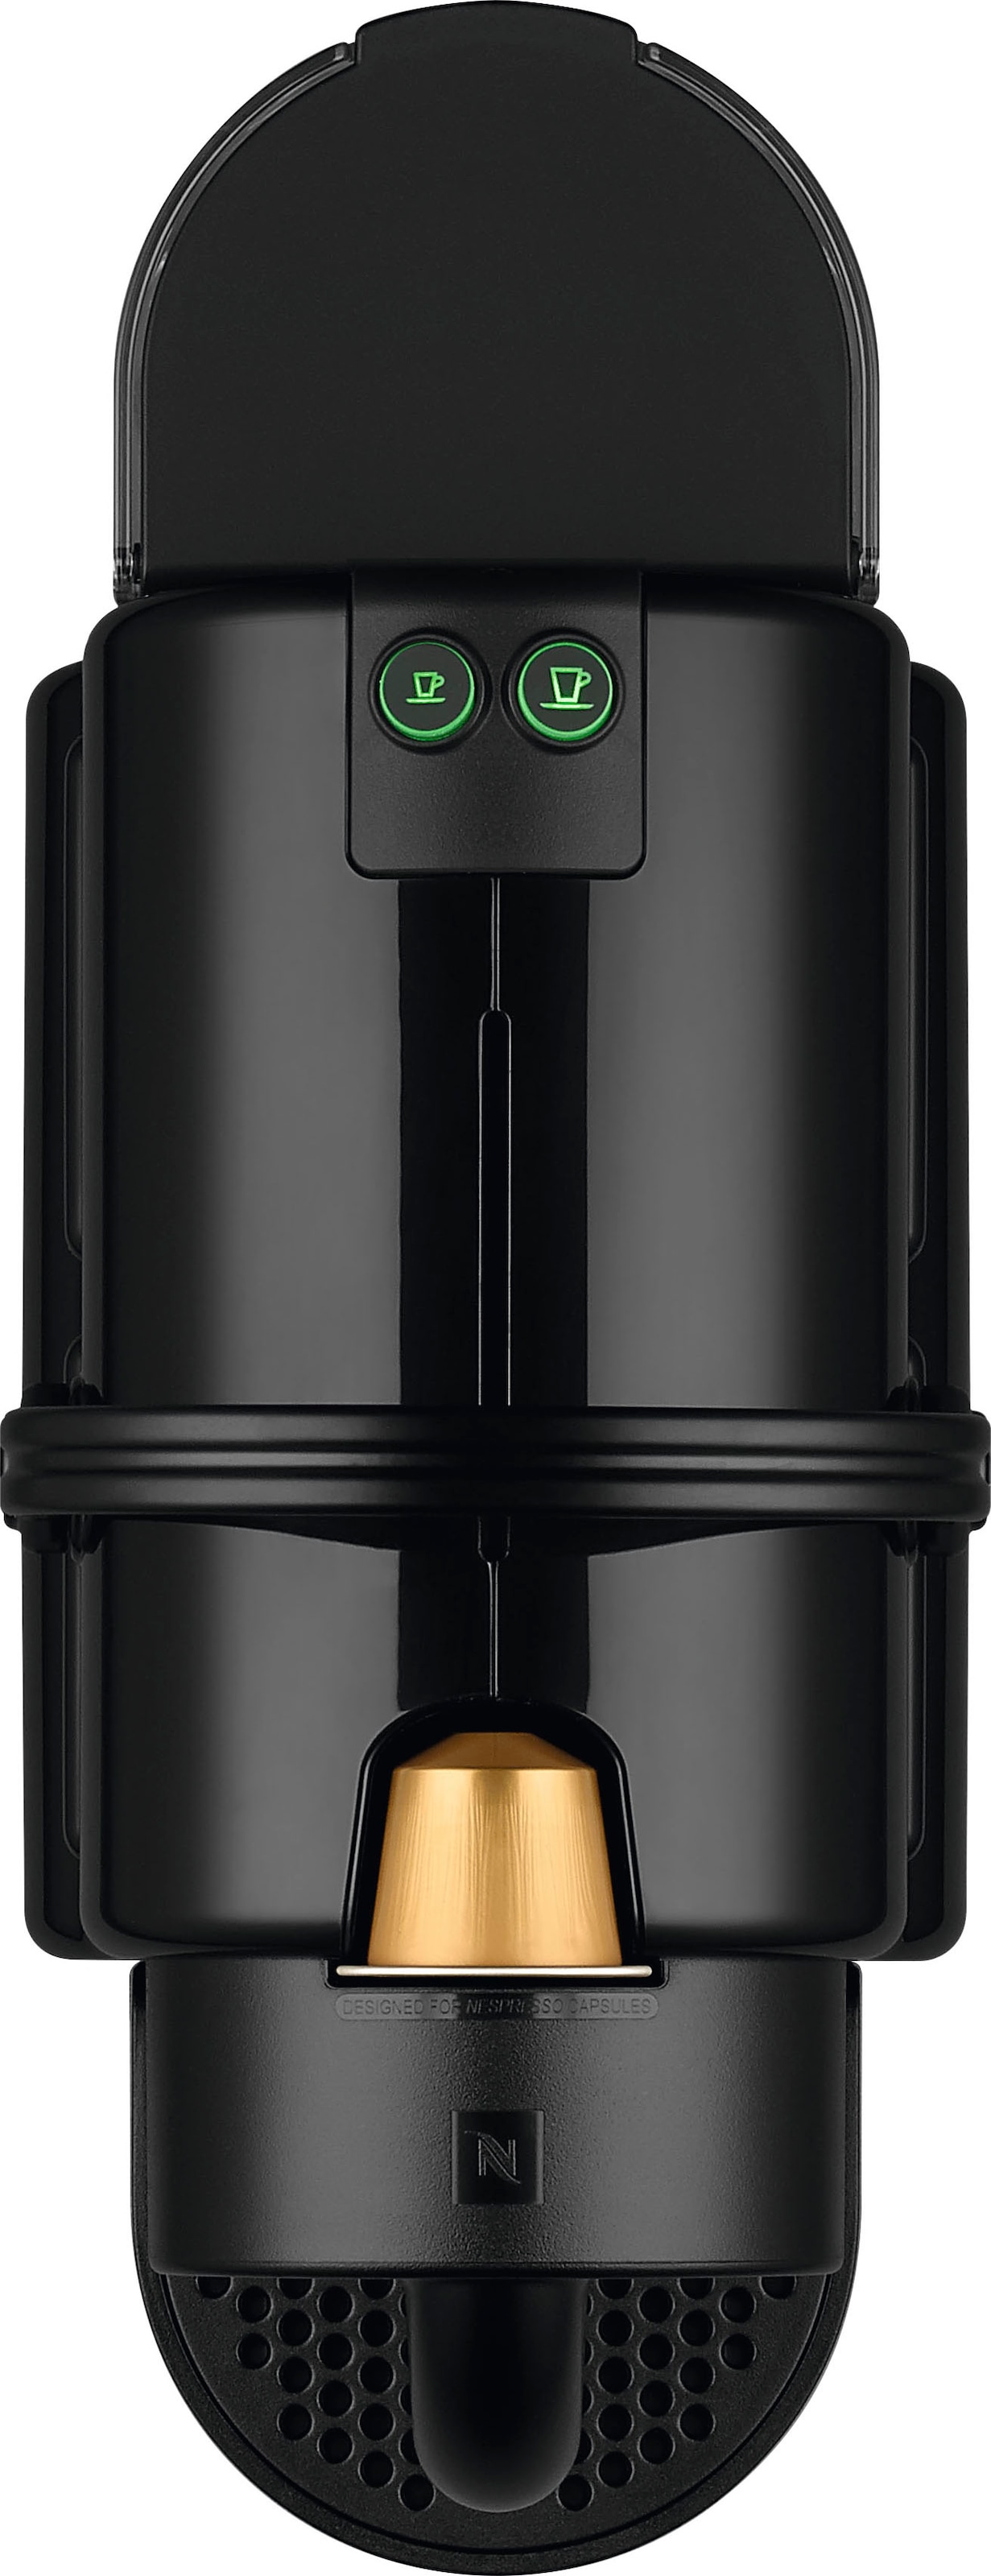 Nespresso Kapselmaschine »Inissia EN 80.B von DeLonghi, Black«, inkl. Willkommenspaket mit 7 Kapseln